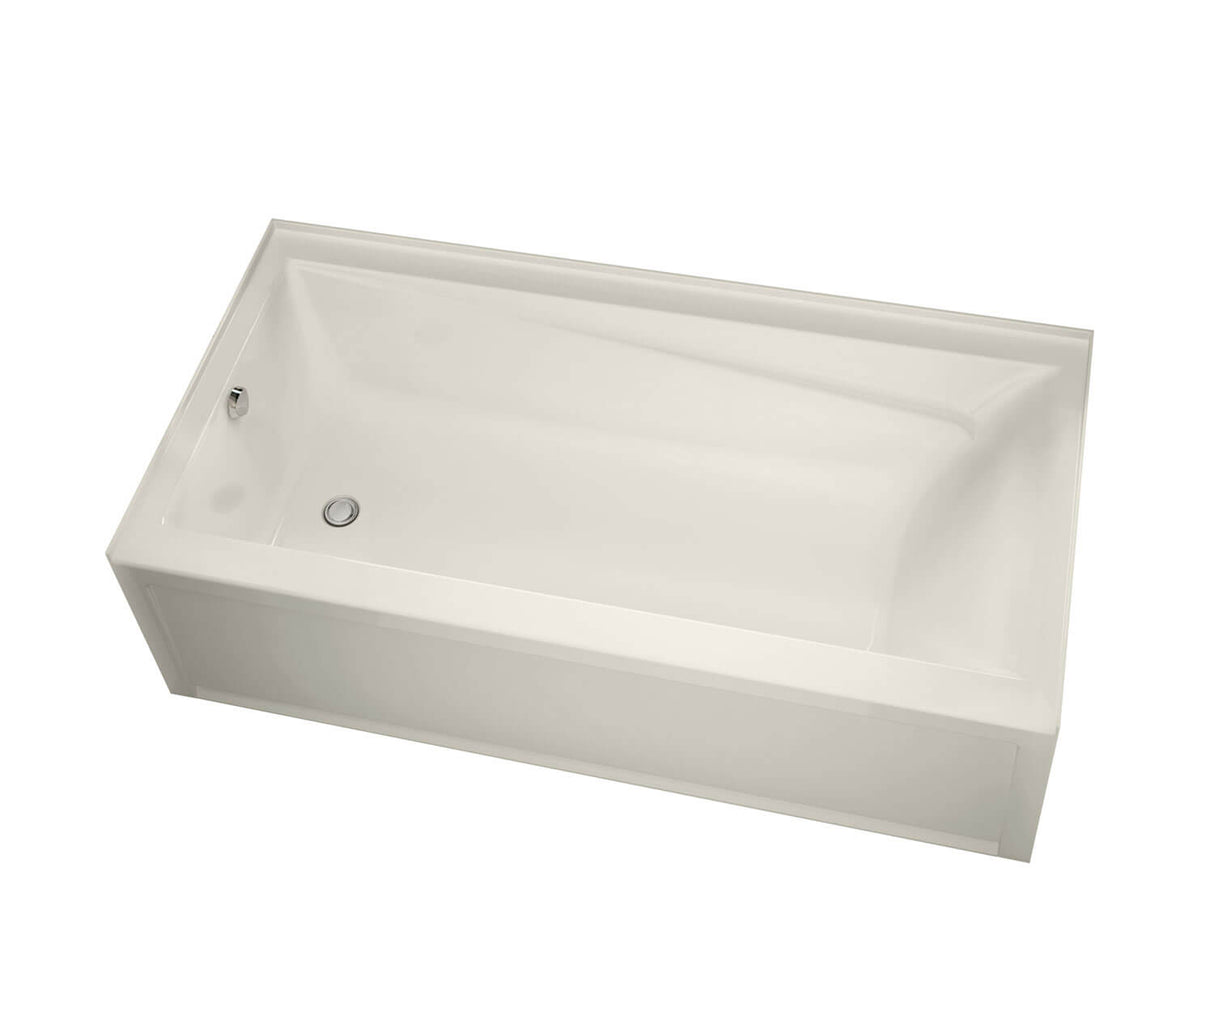 MAAX 106225-L-103-007 Exhibit 7232 IFS Acrylic Alcove Left-Hand Drain Aeroeffect Bathtub in Biscuit